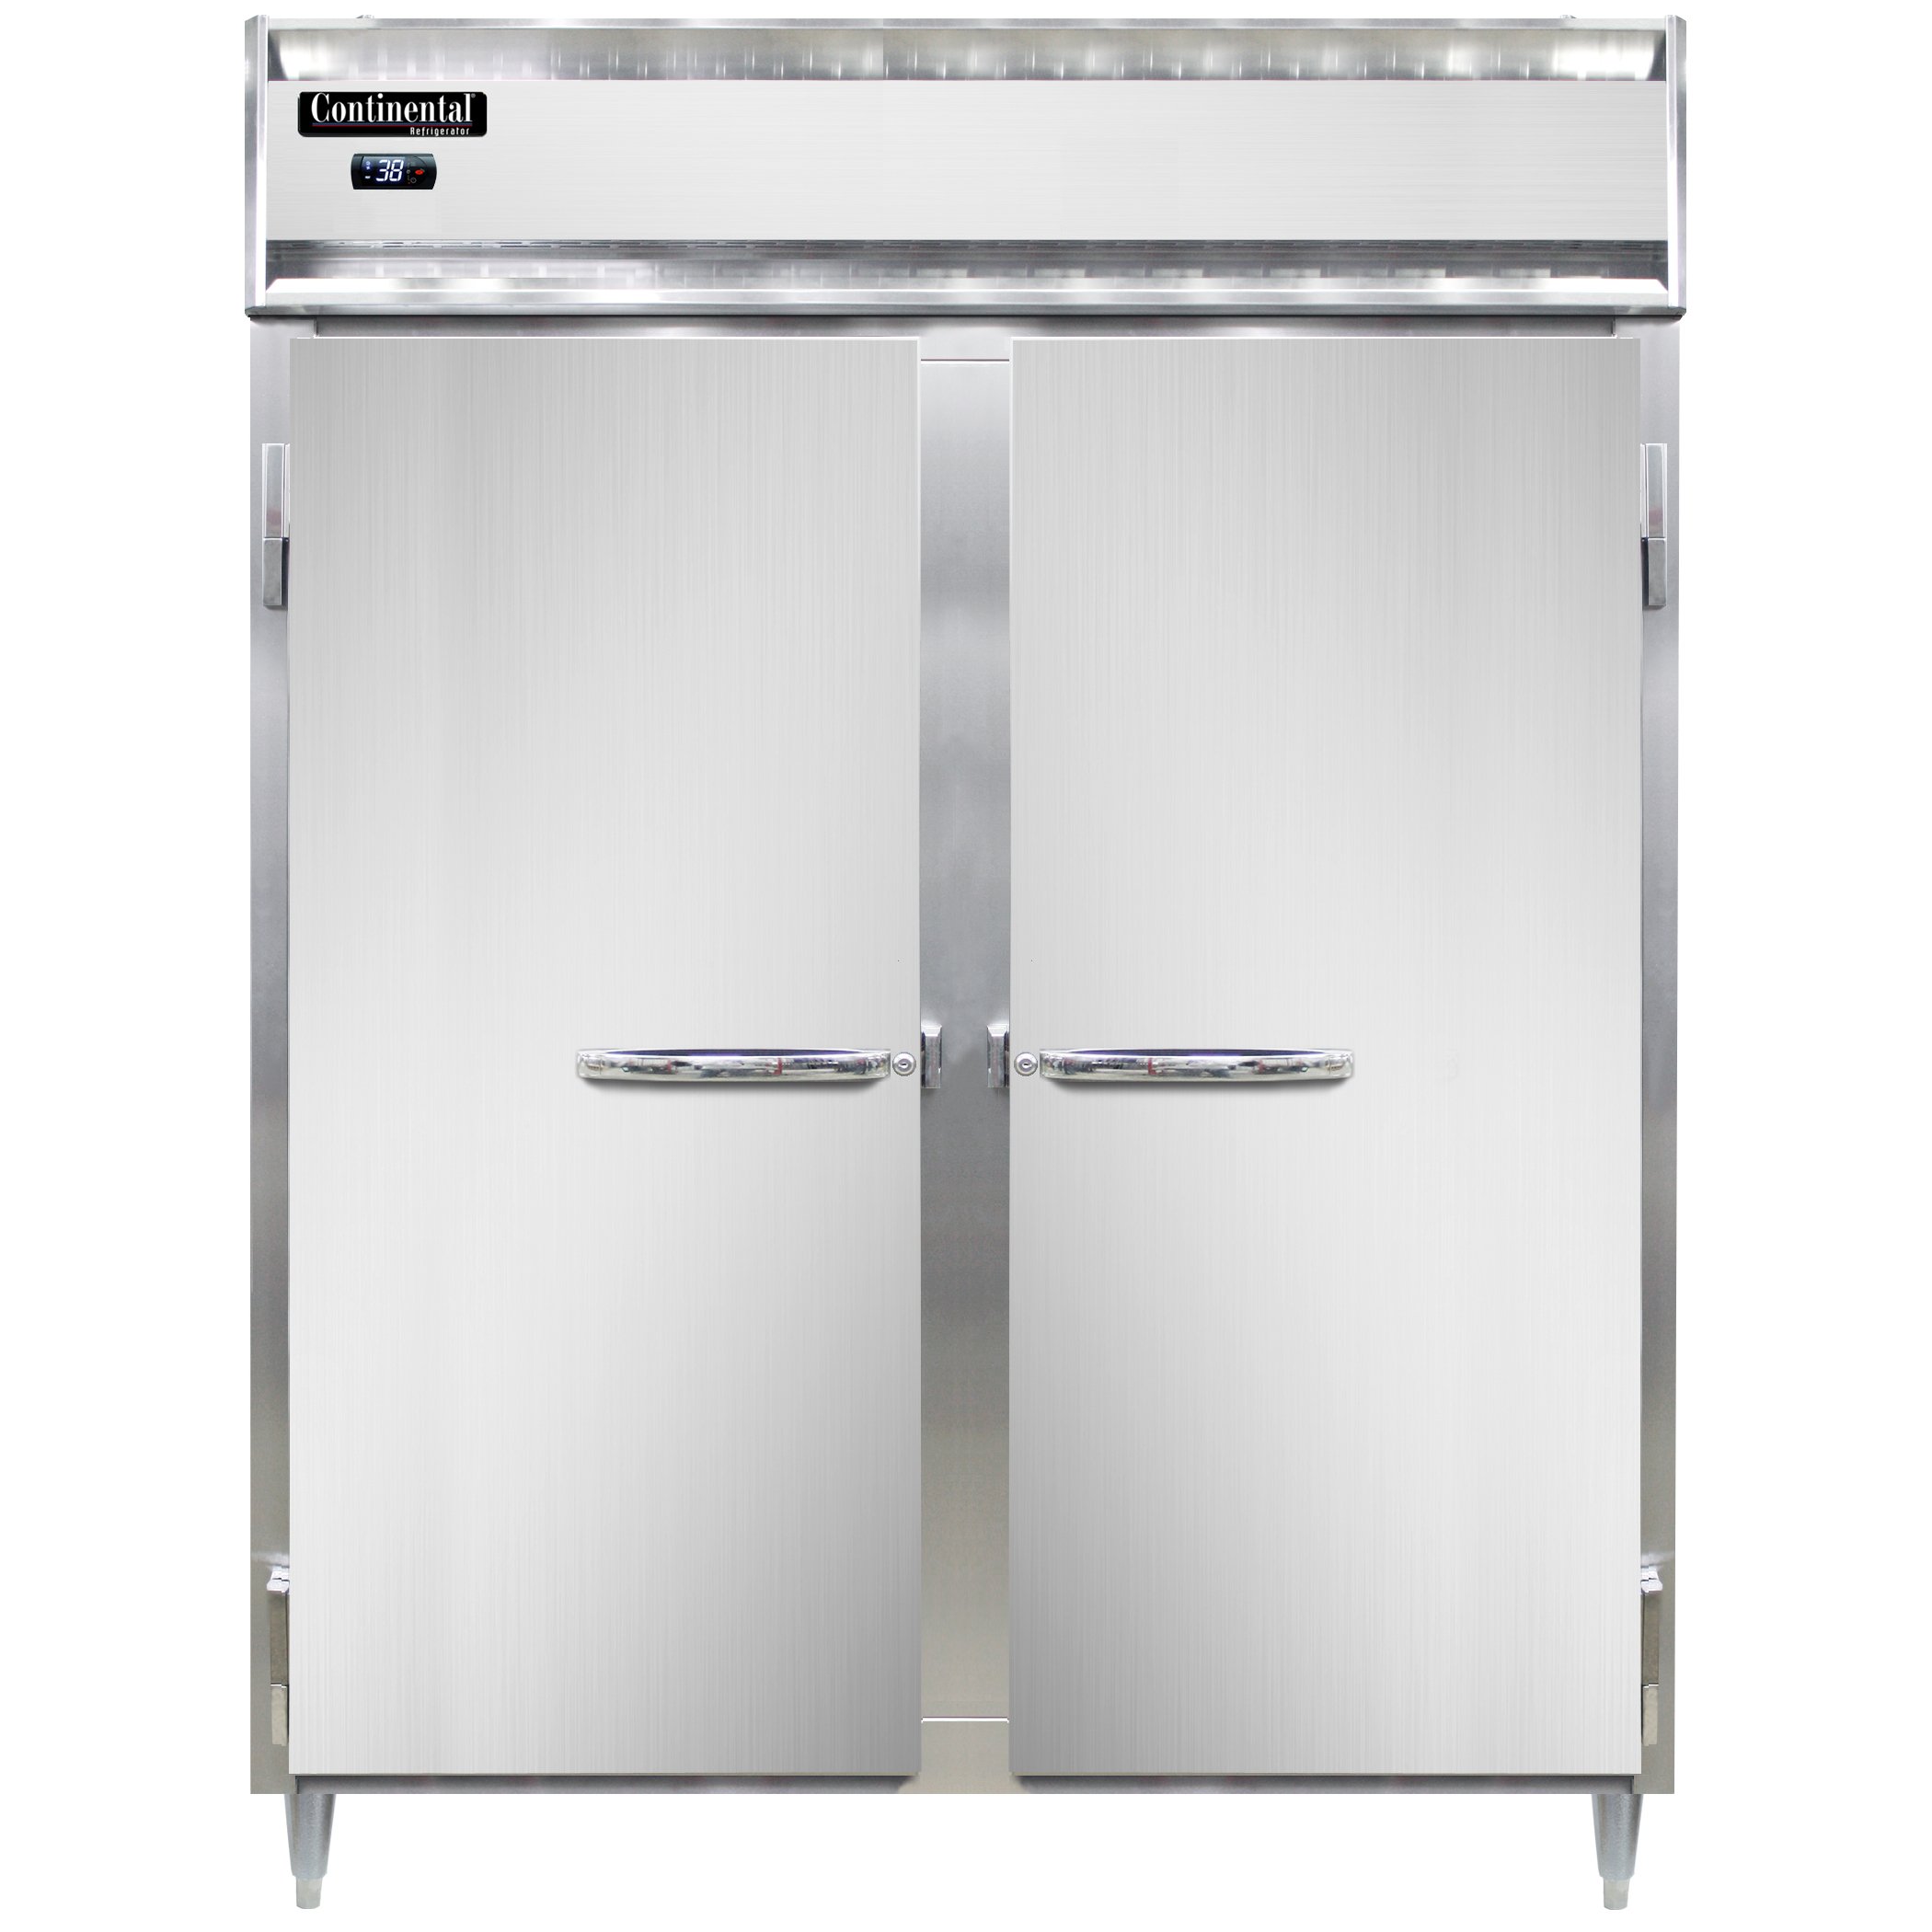 Continental Refrigerator D2RENPT 57″ Pass-Thru Refrigerator w/ 4 Solid Doors, 52 cu ft